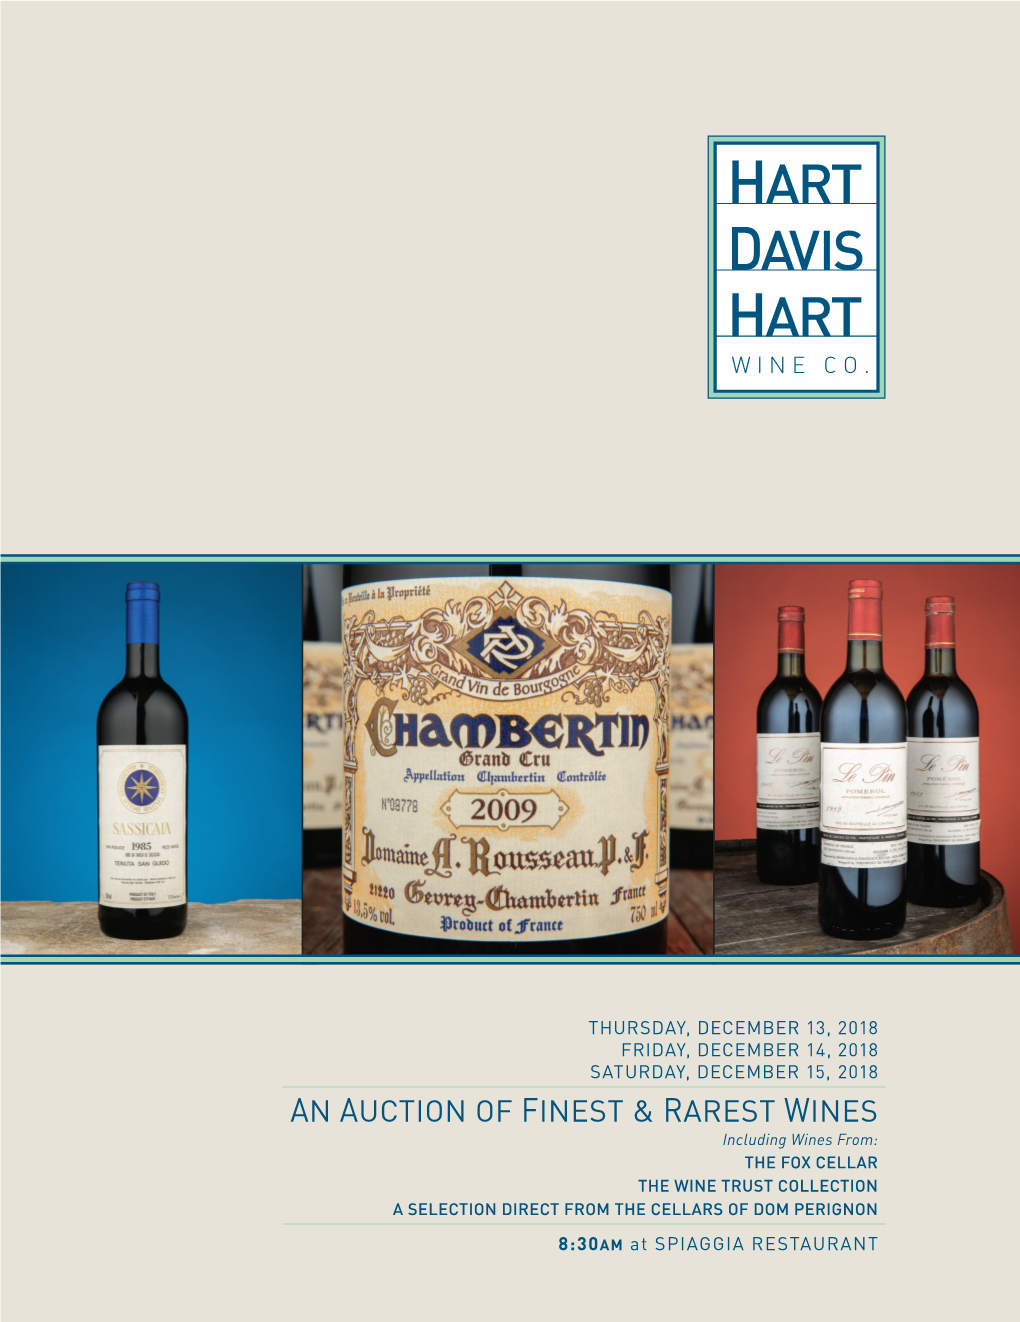 An Auction of Finest & Rarest Wines